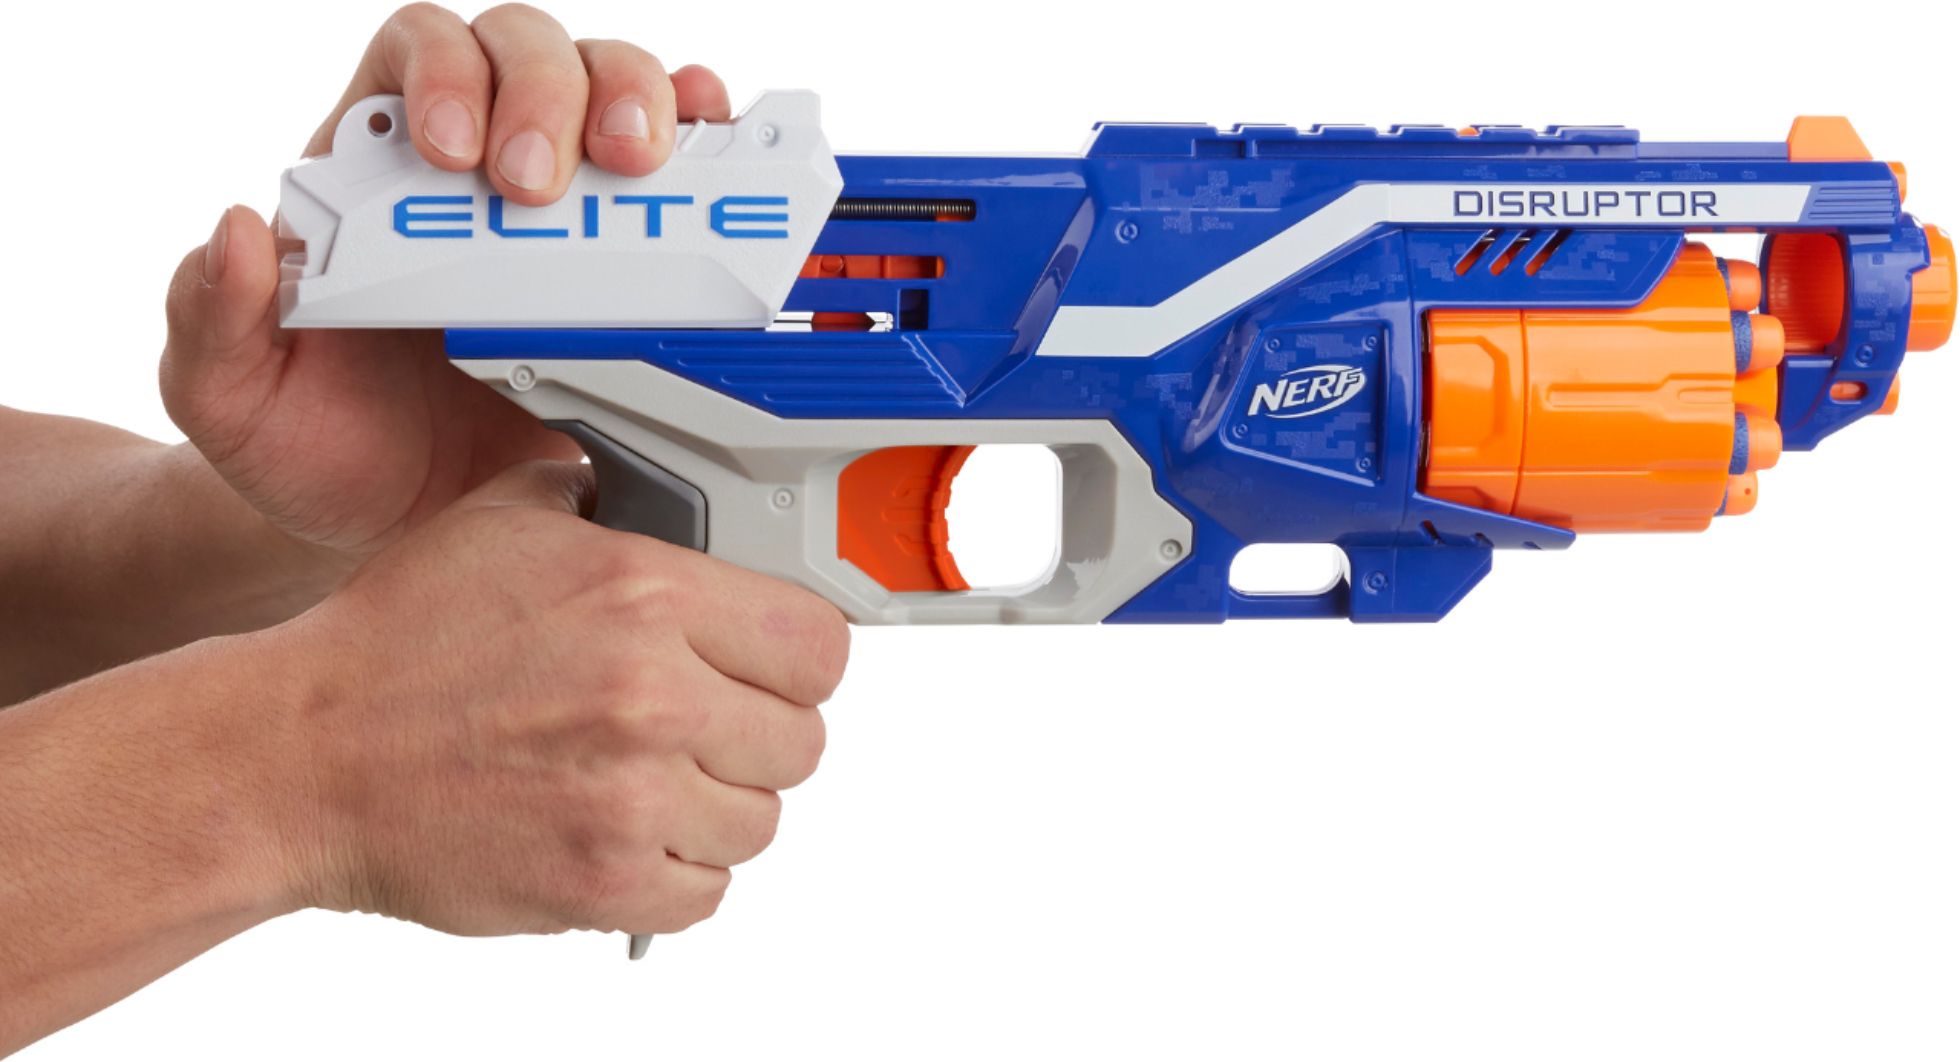 NERF N-Strike Elite Disruptor Blaster Toy B9837 for sale online